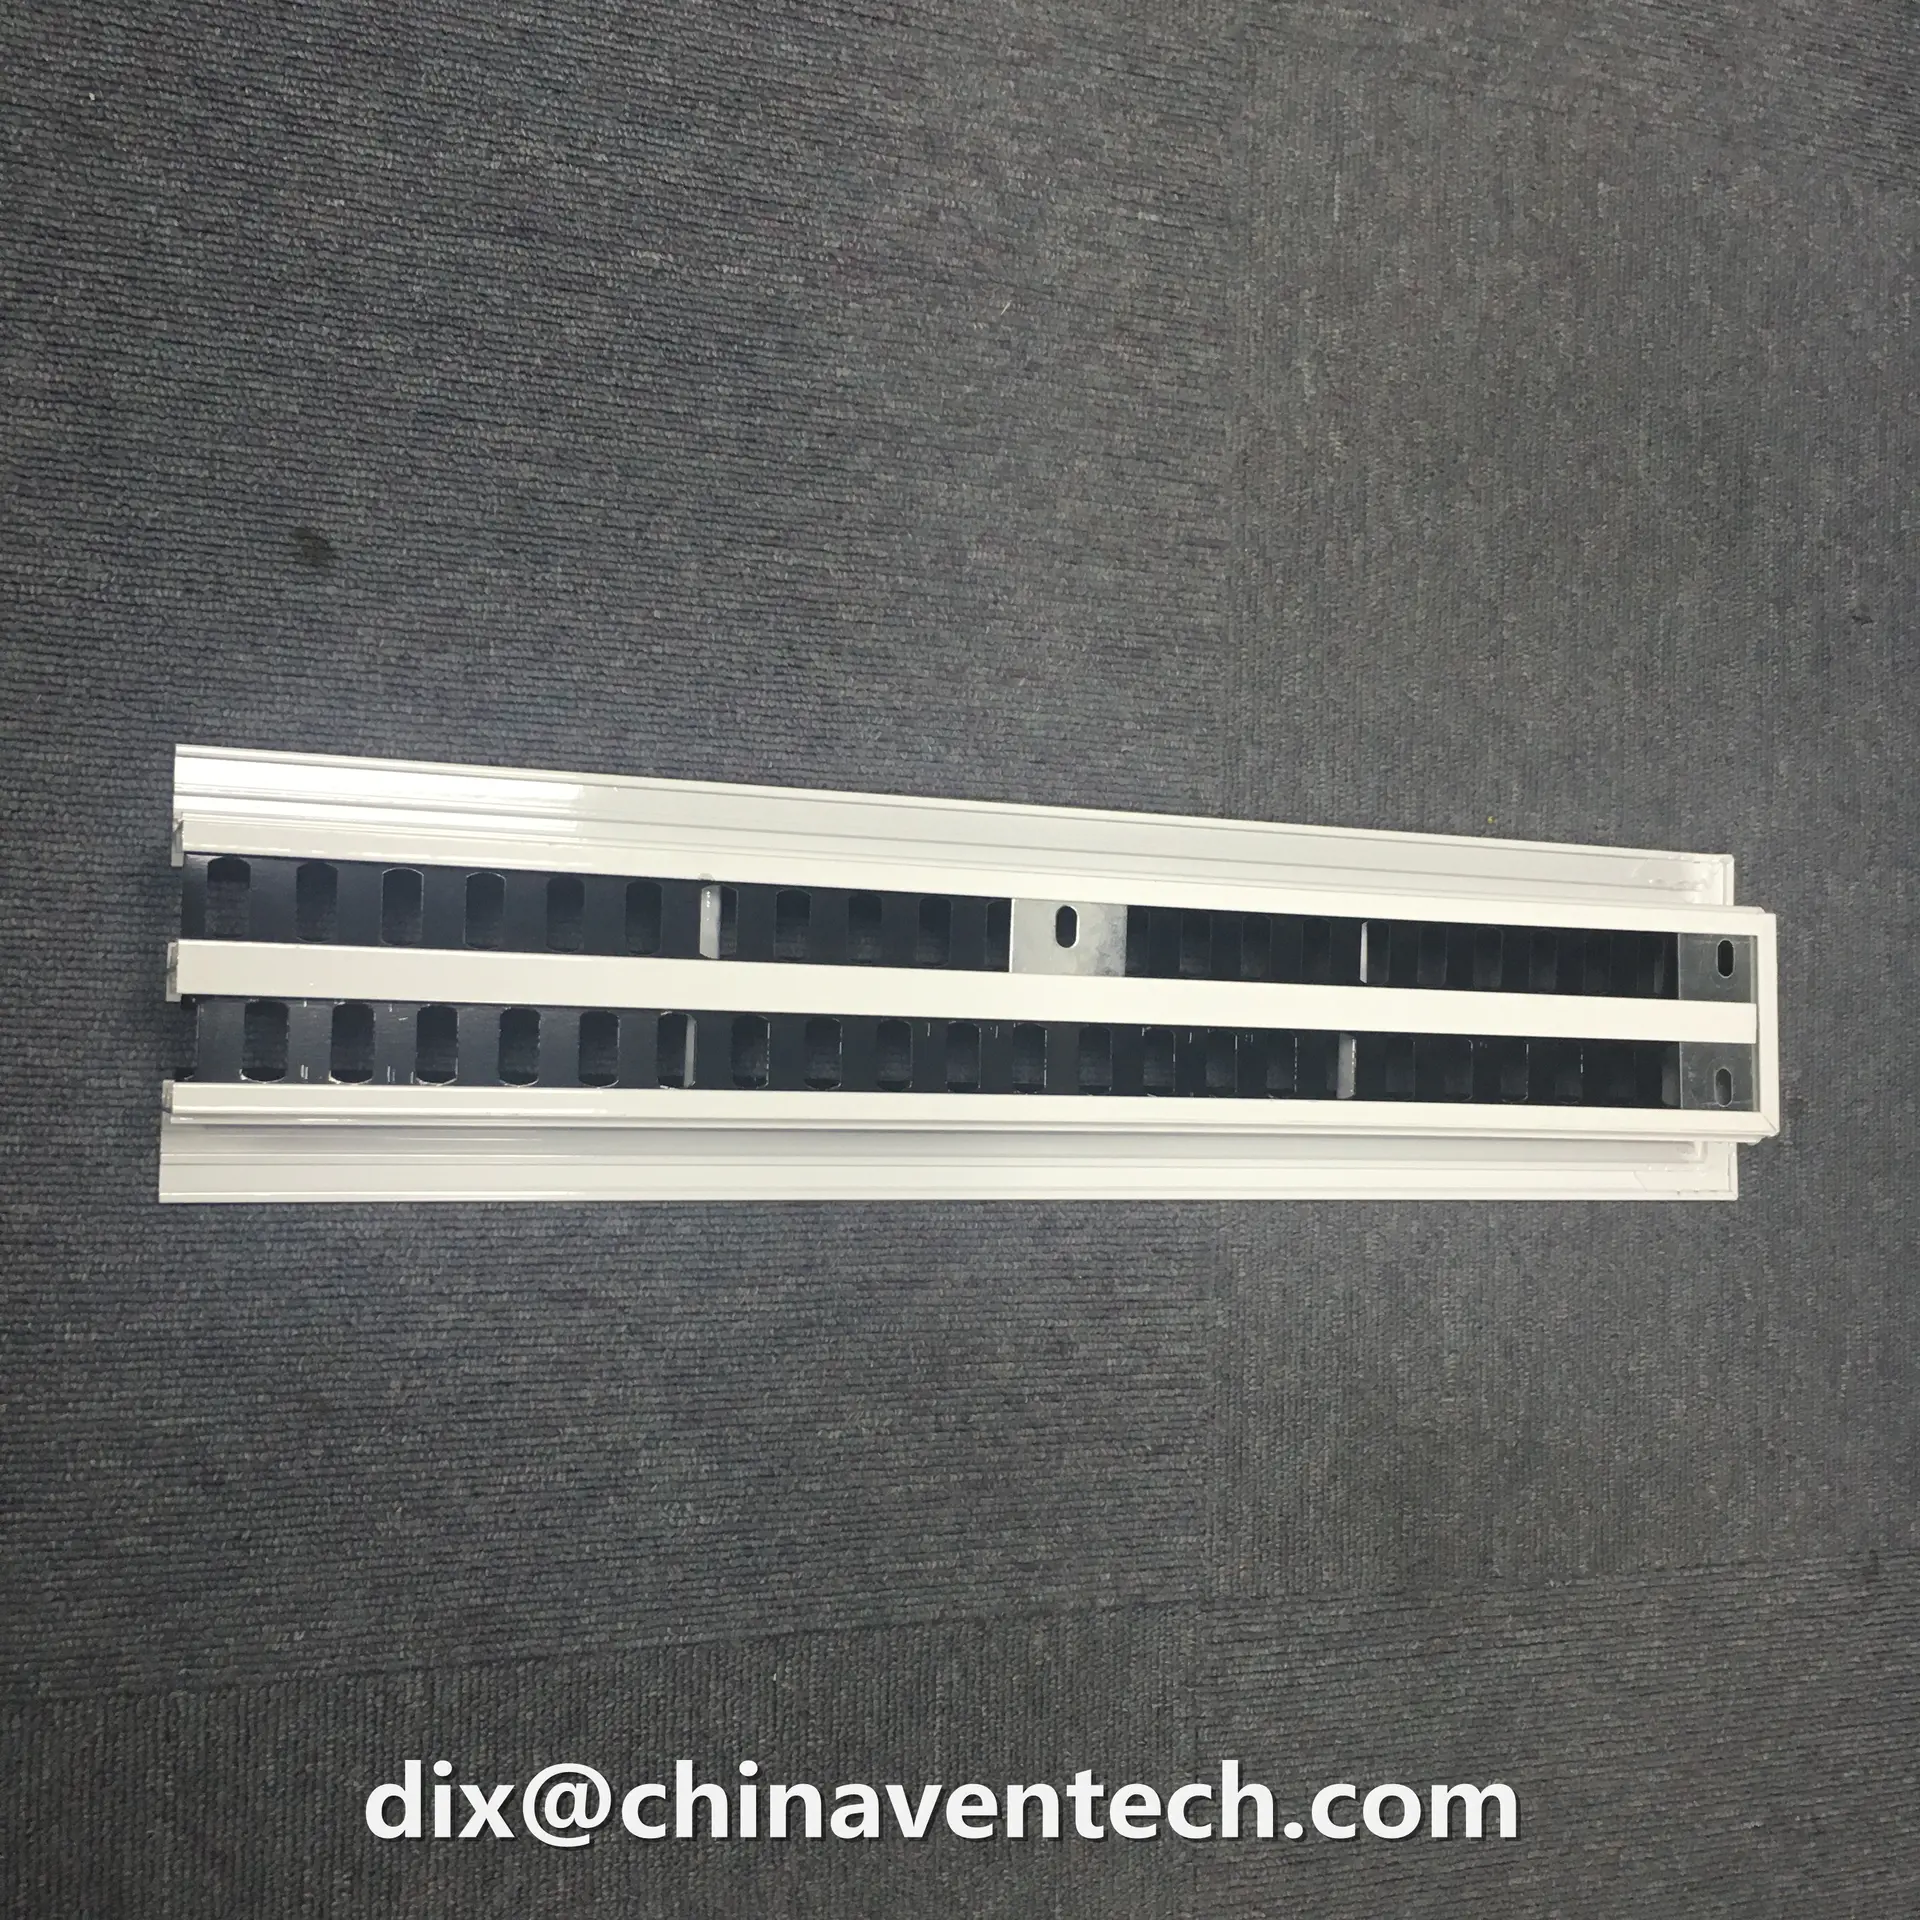 Hvac duct work flowbar diffuser air supply linear slot diffuser with plenum box